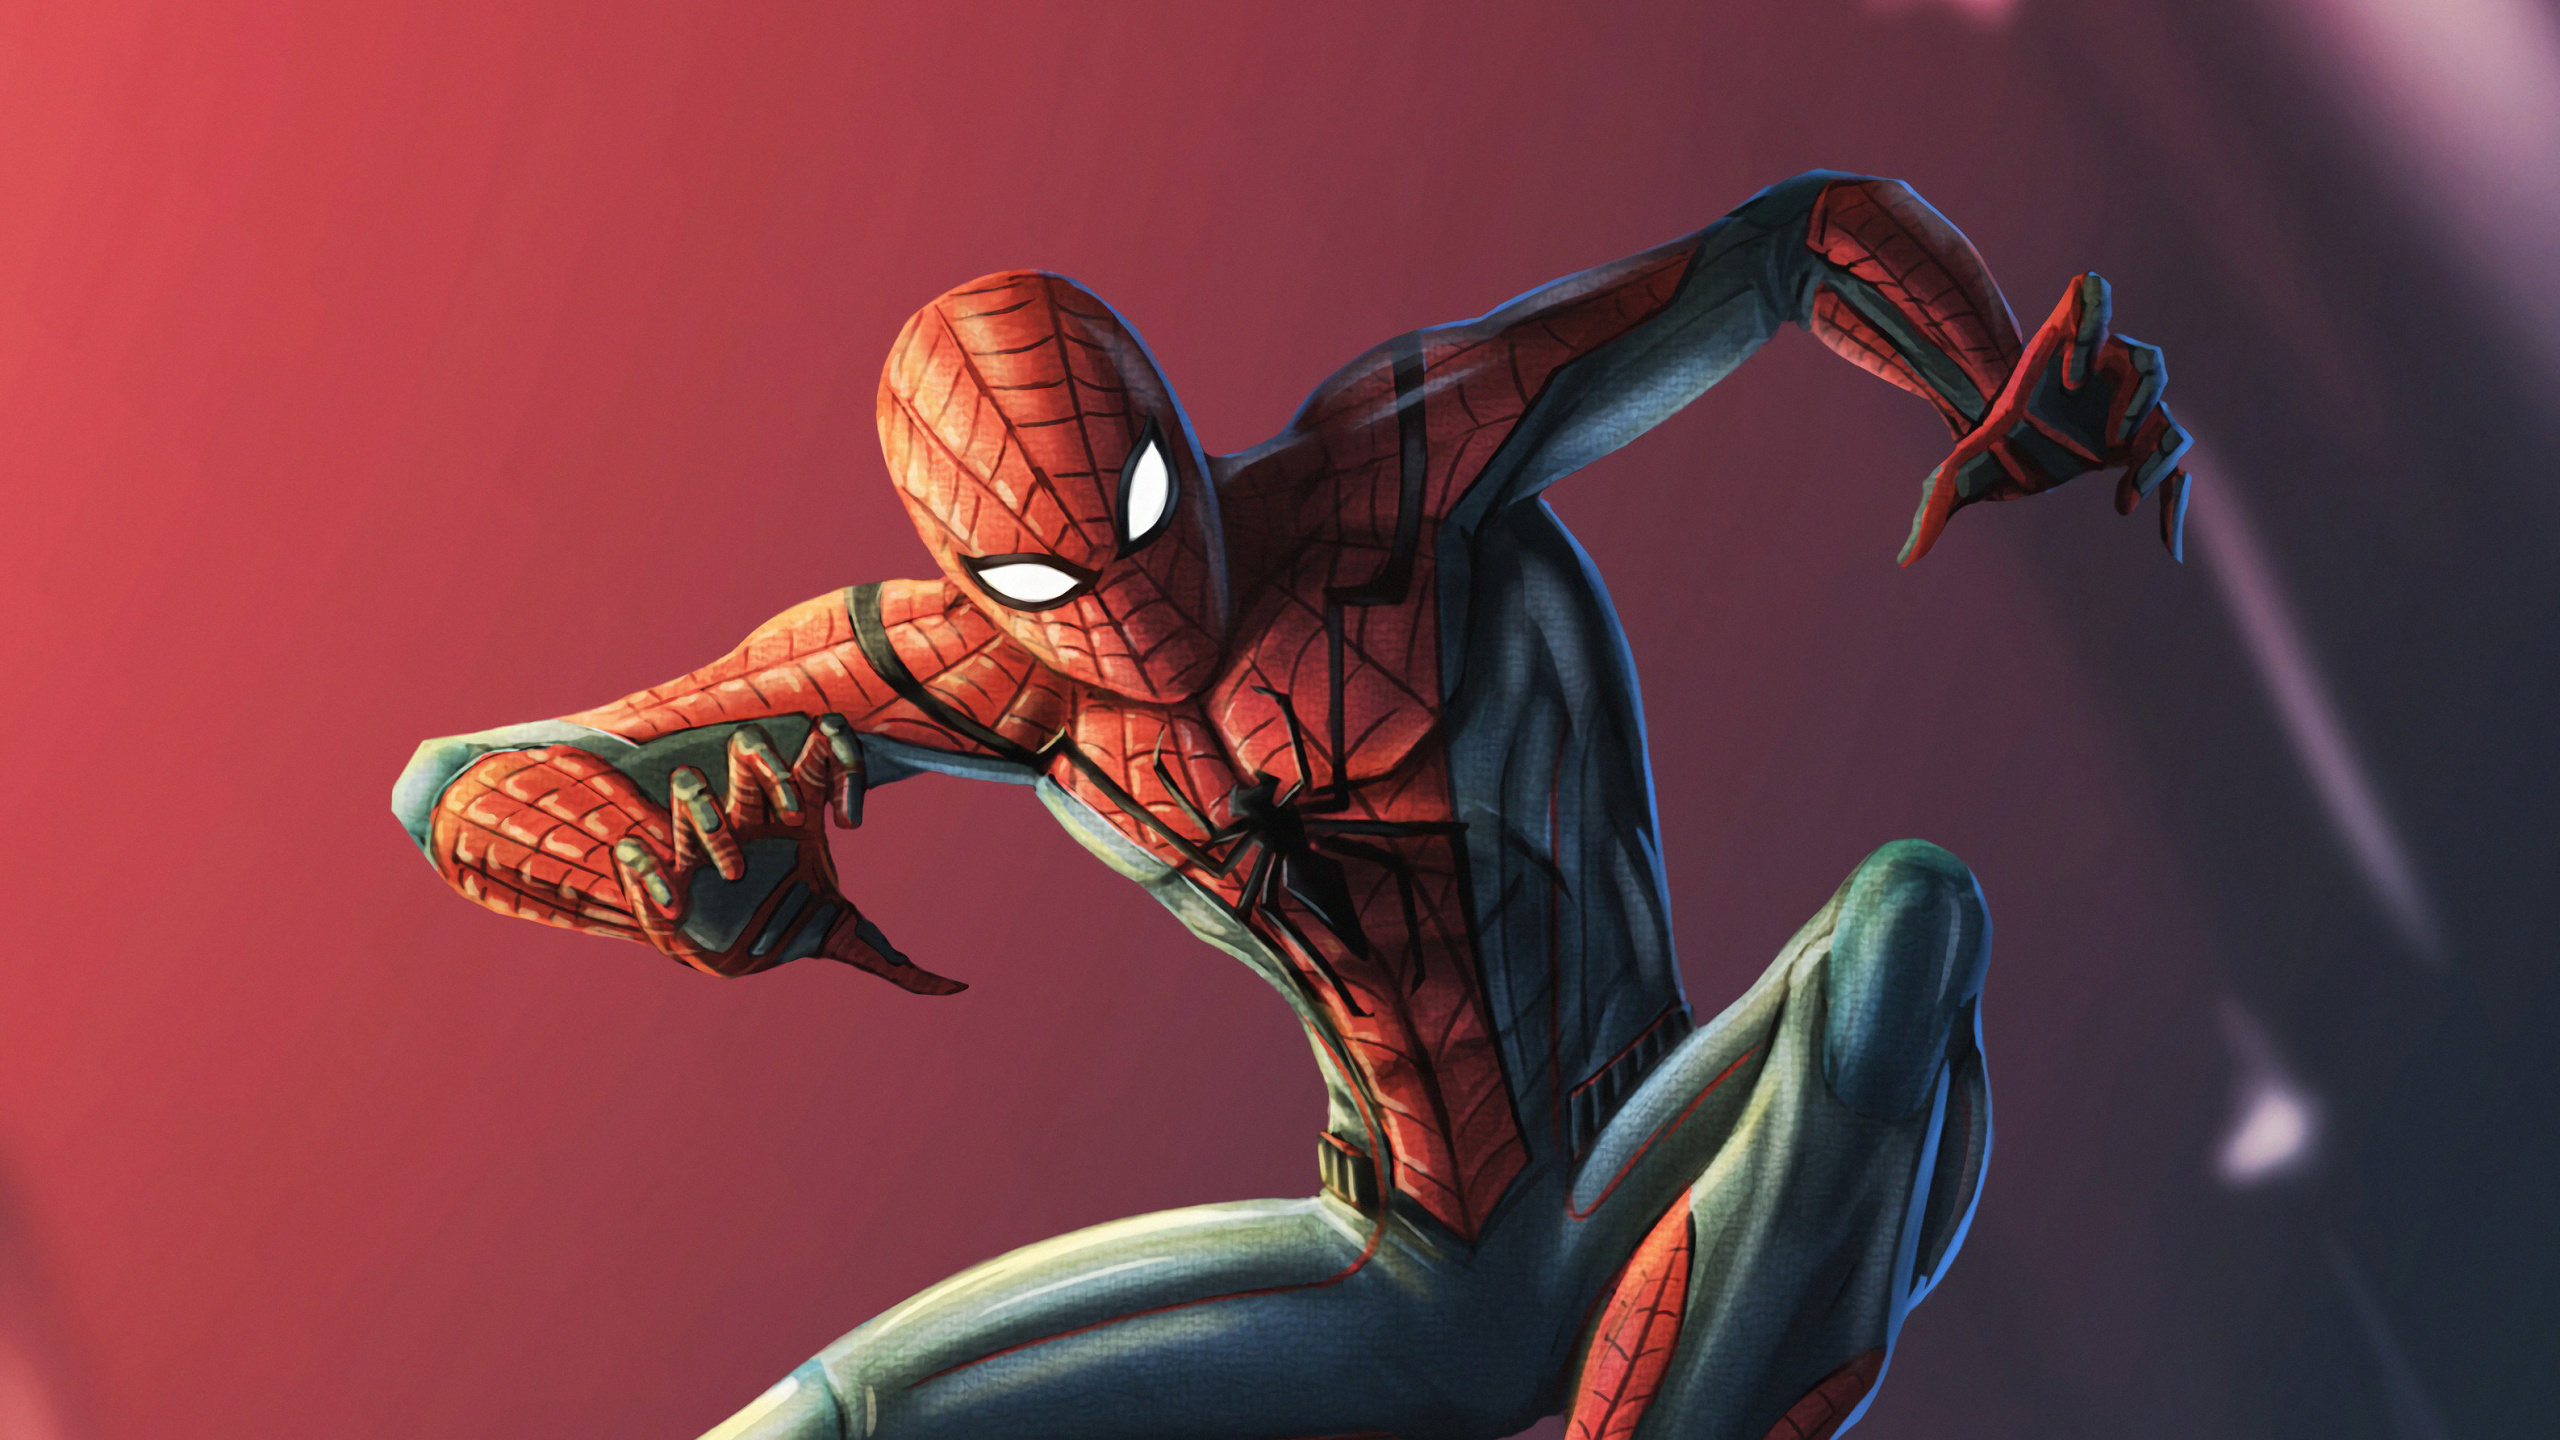 Spider-man, 惊奇漫画, 超级英雄, 超级大, 艺术 壁纸 2560x1440 允许